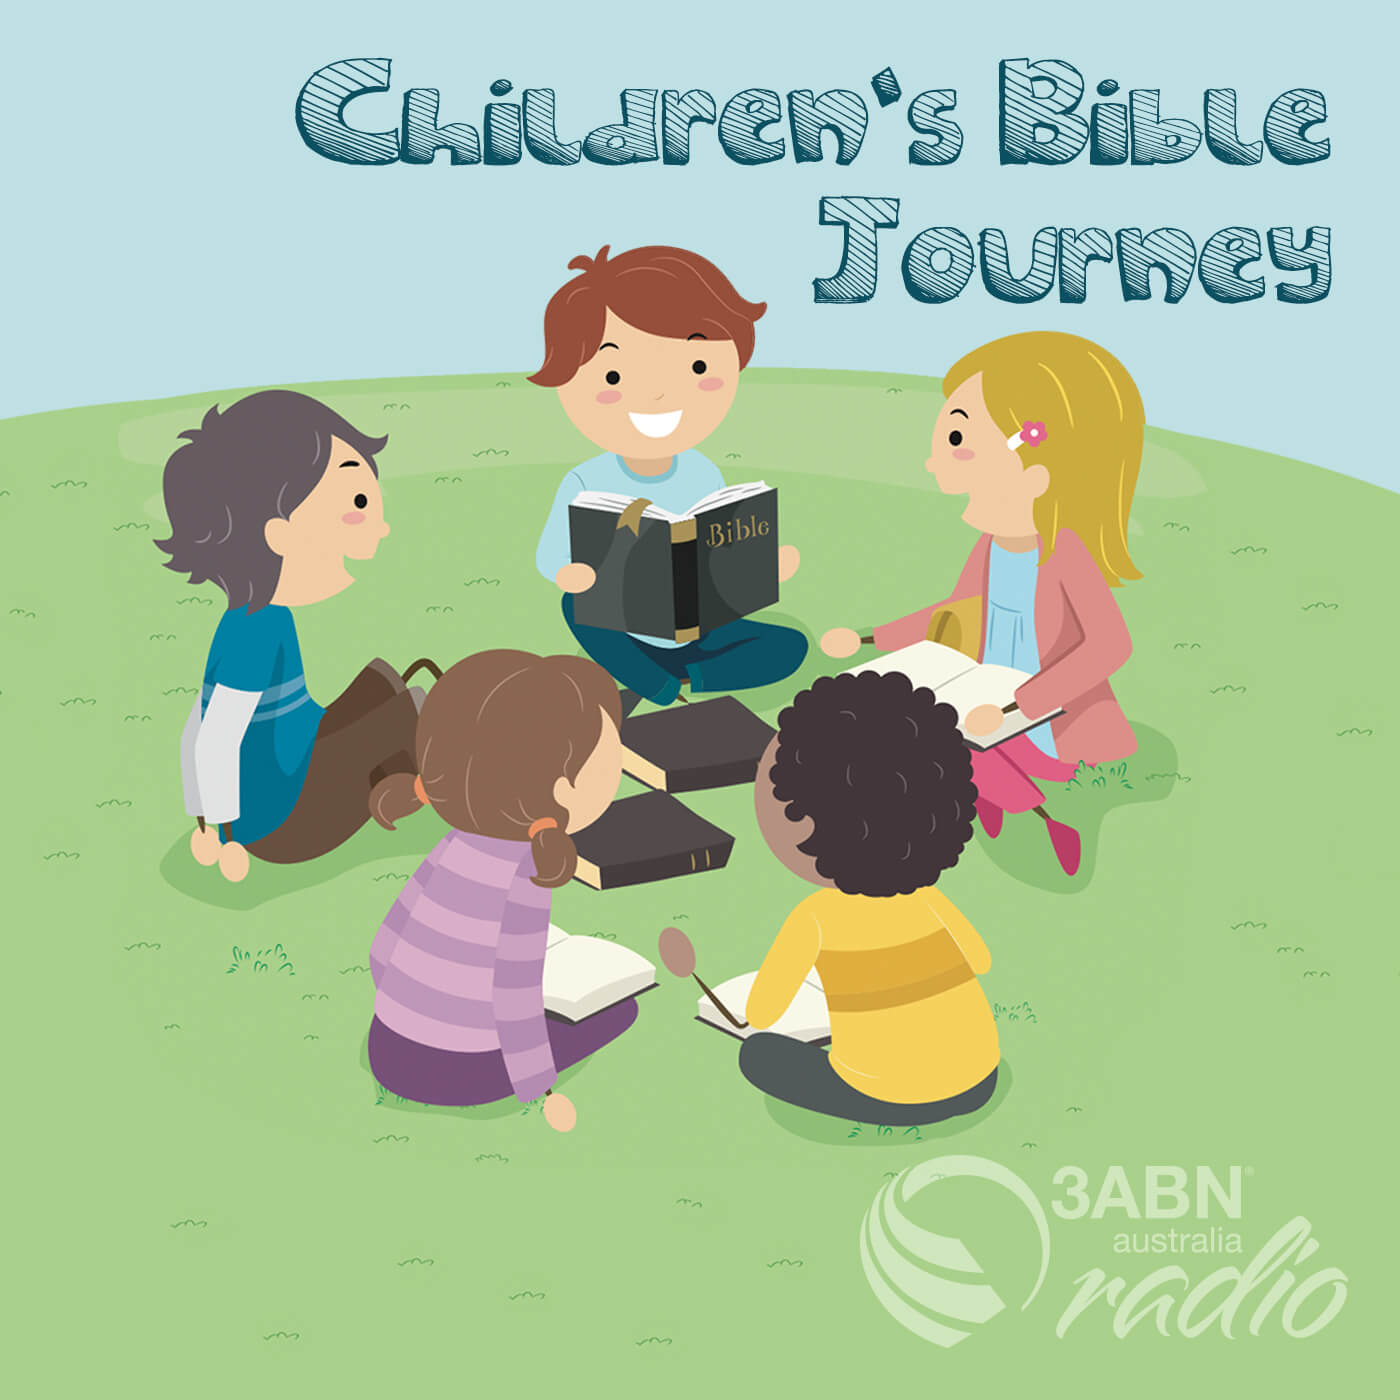 Children's Bible Journey - 2195